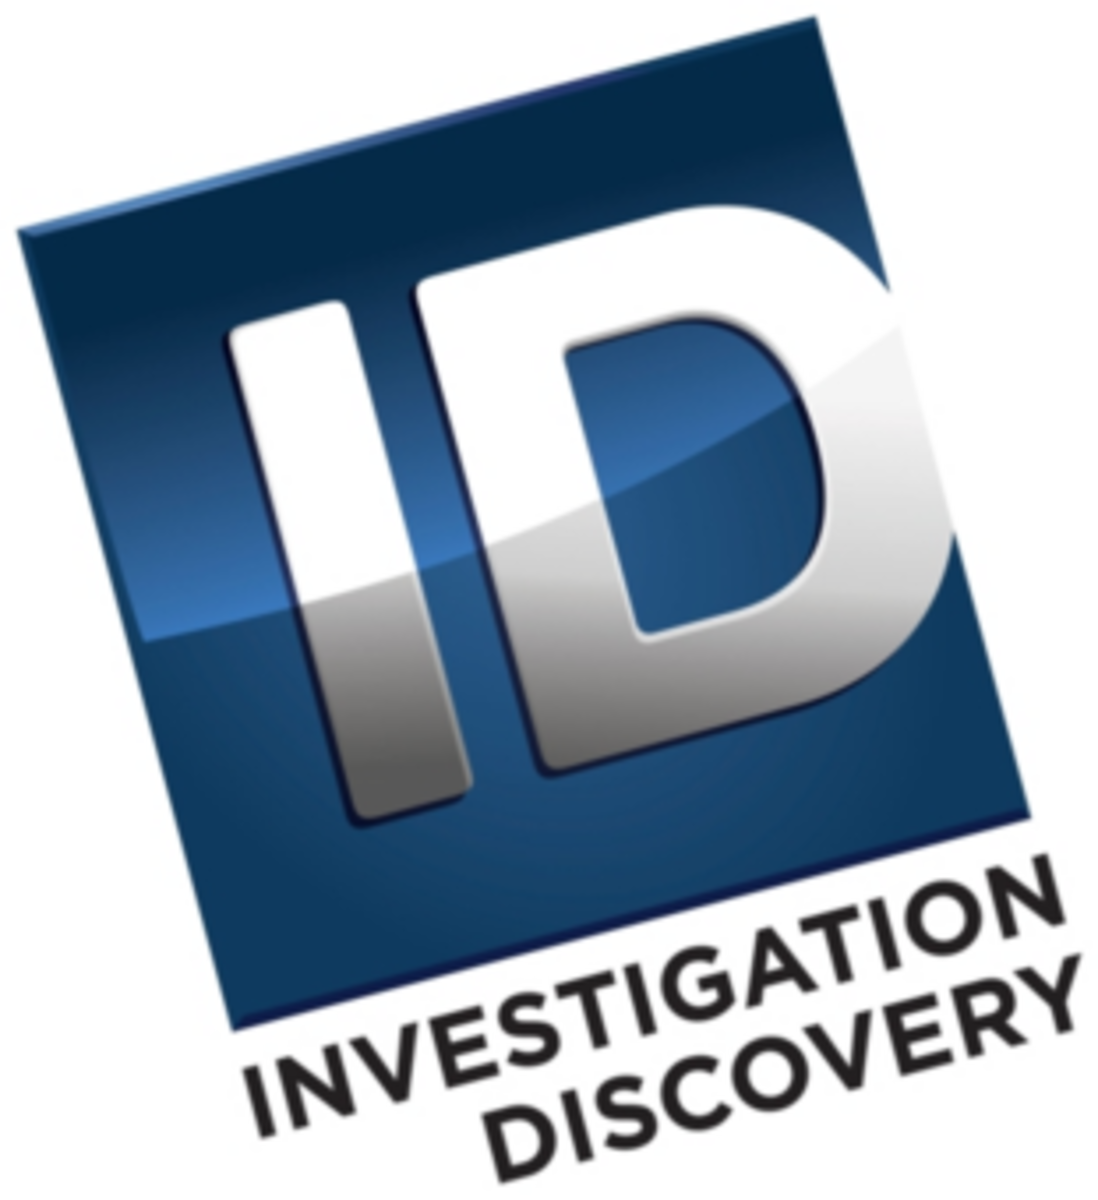 Discover id. ID investigation Discovery. Investigation Discovery logo. Инвестигатион Дискавери.